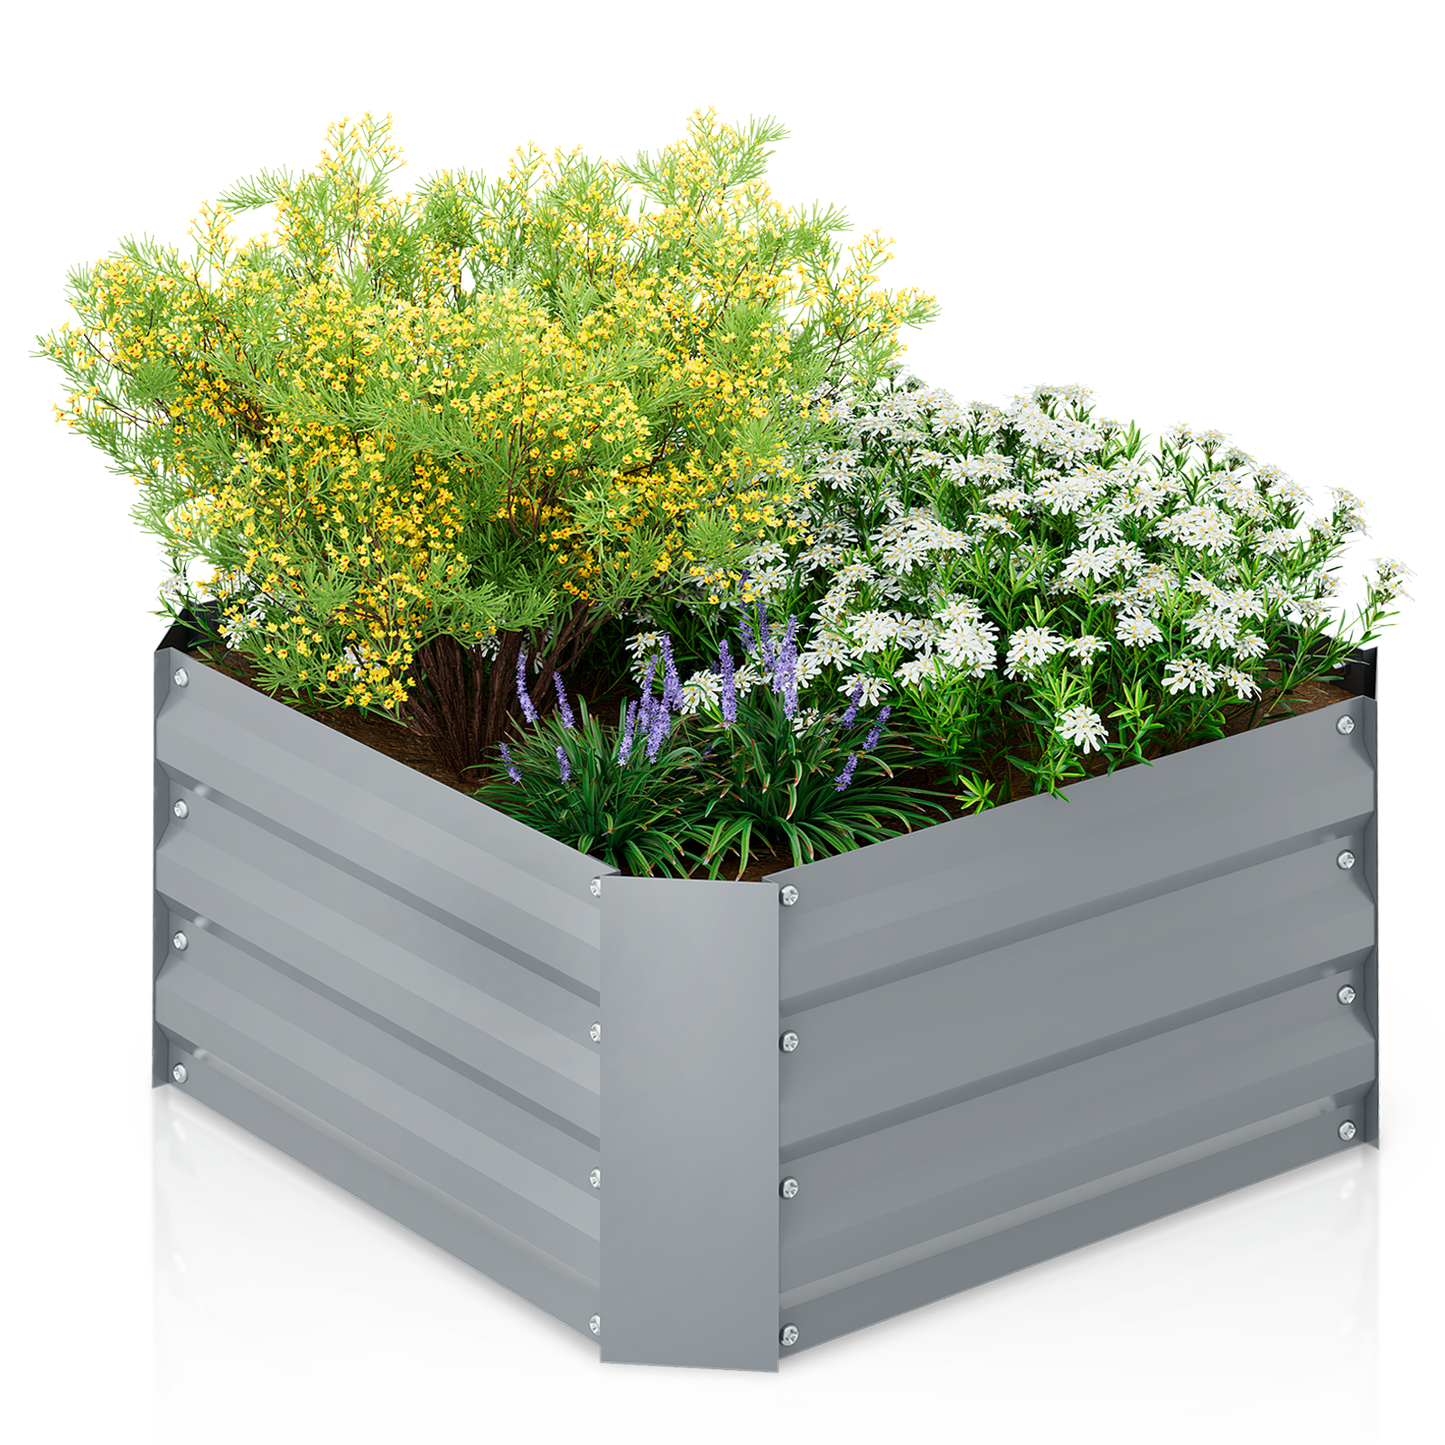 12"H Patio Metal Raised Garden Bed Kit Vegetable Flower Planter 24" Square Box